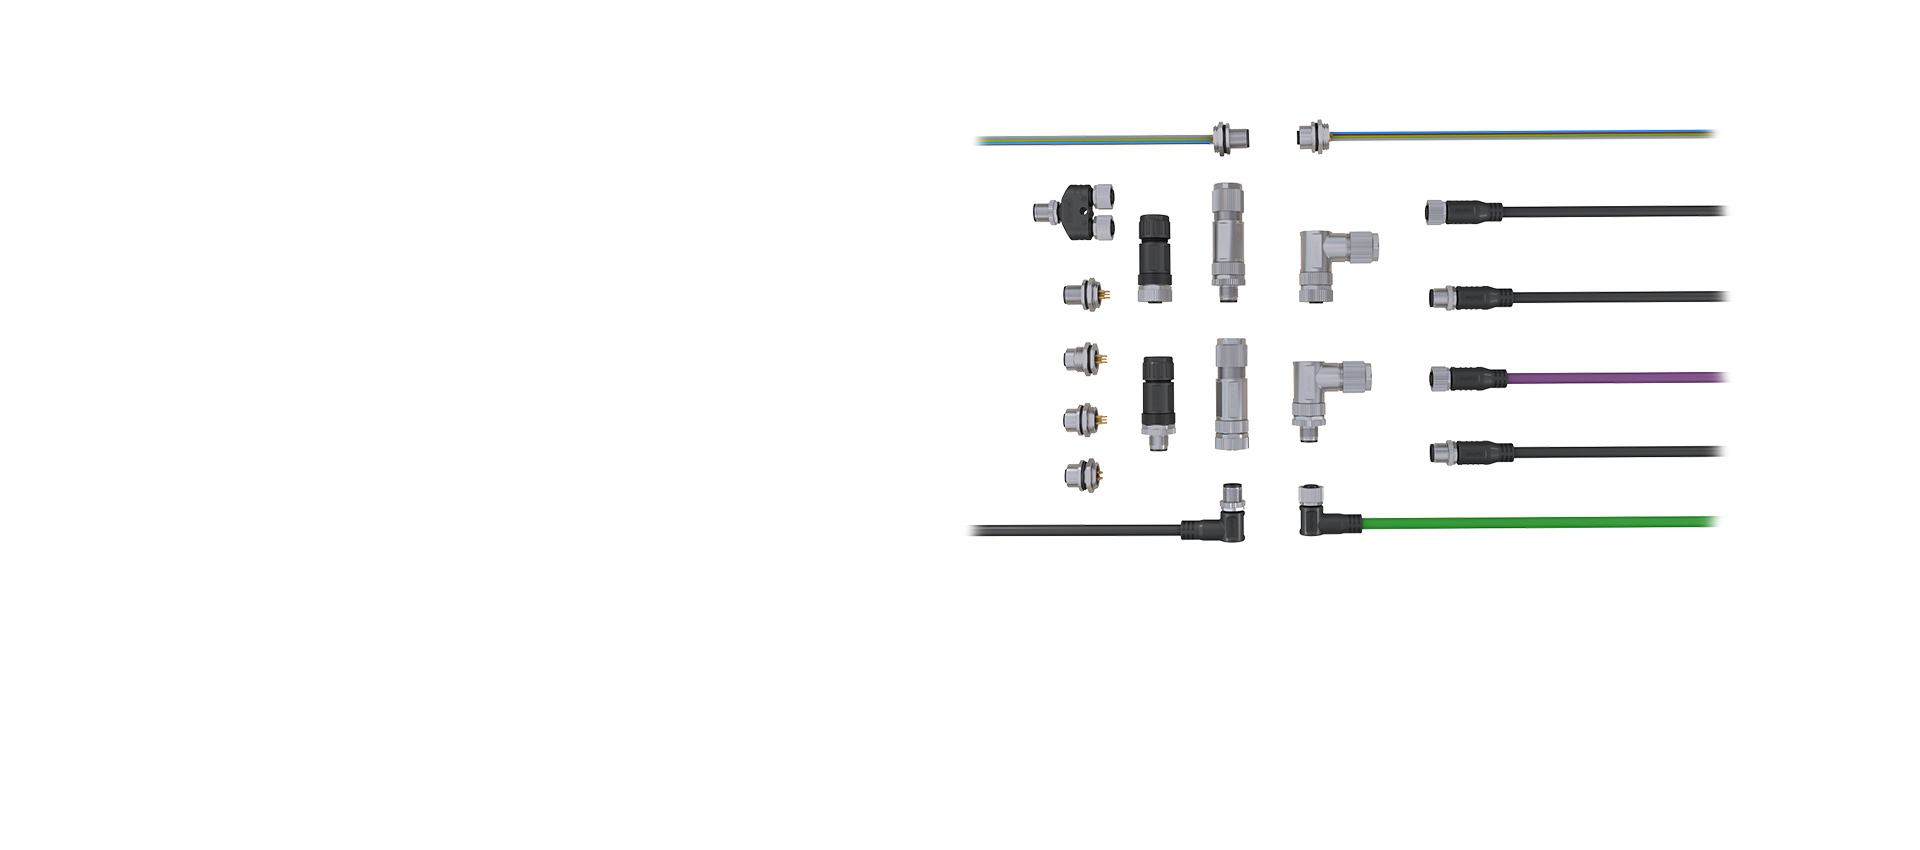 Konektor melingkar SUPU M8/M12memberikan solusi yang idealuntuk aplikasi industri